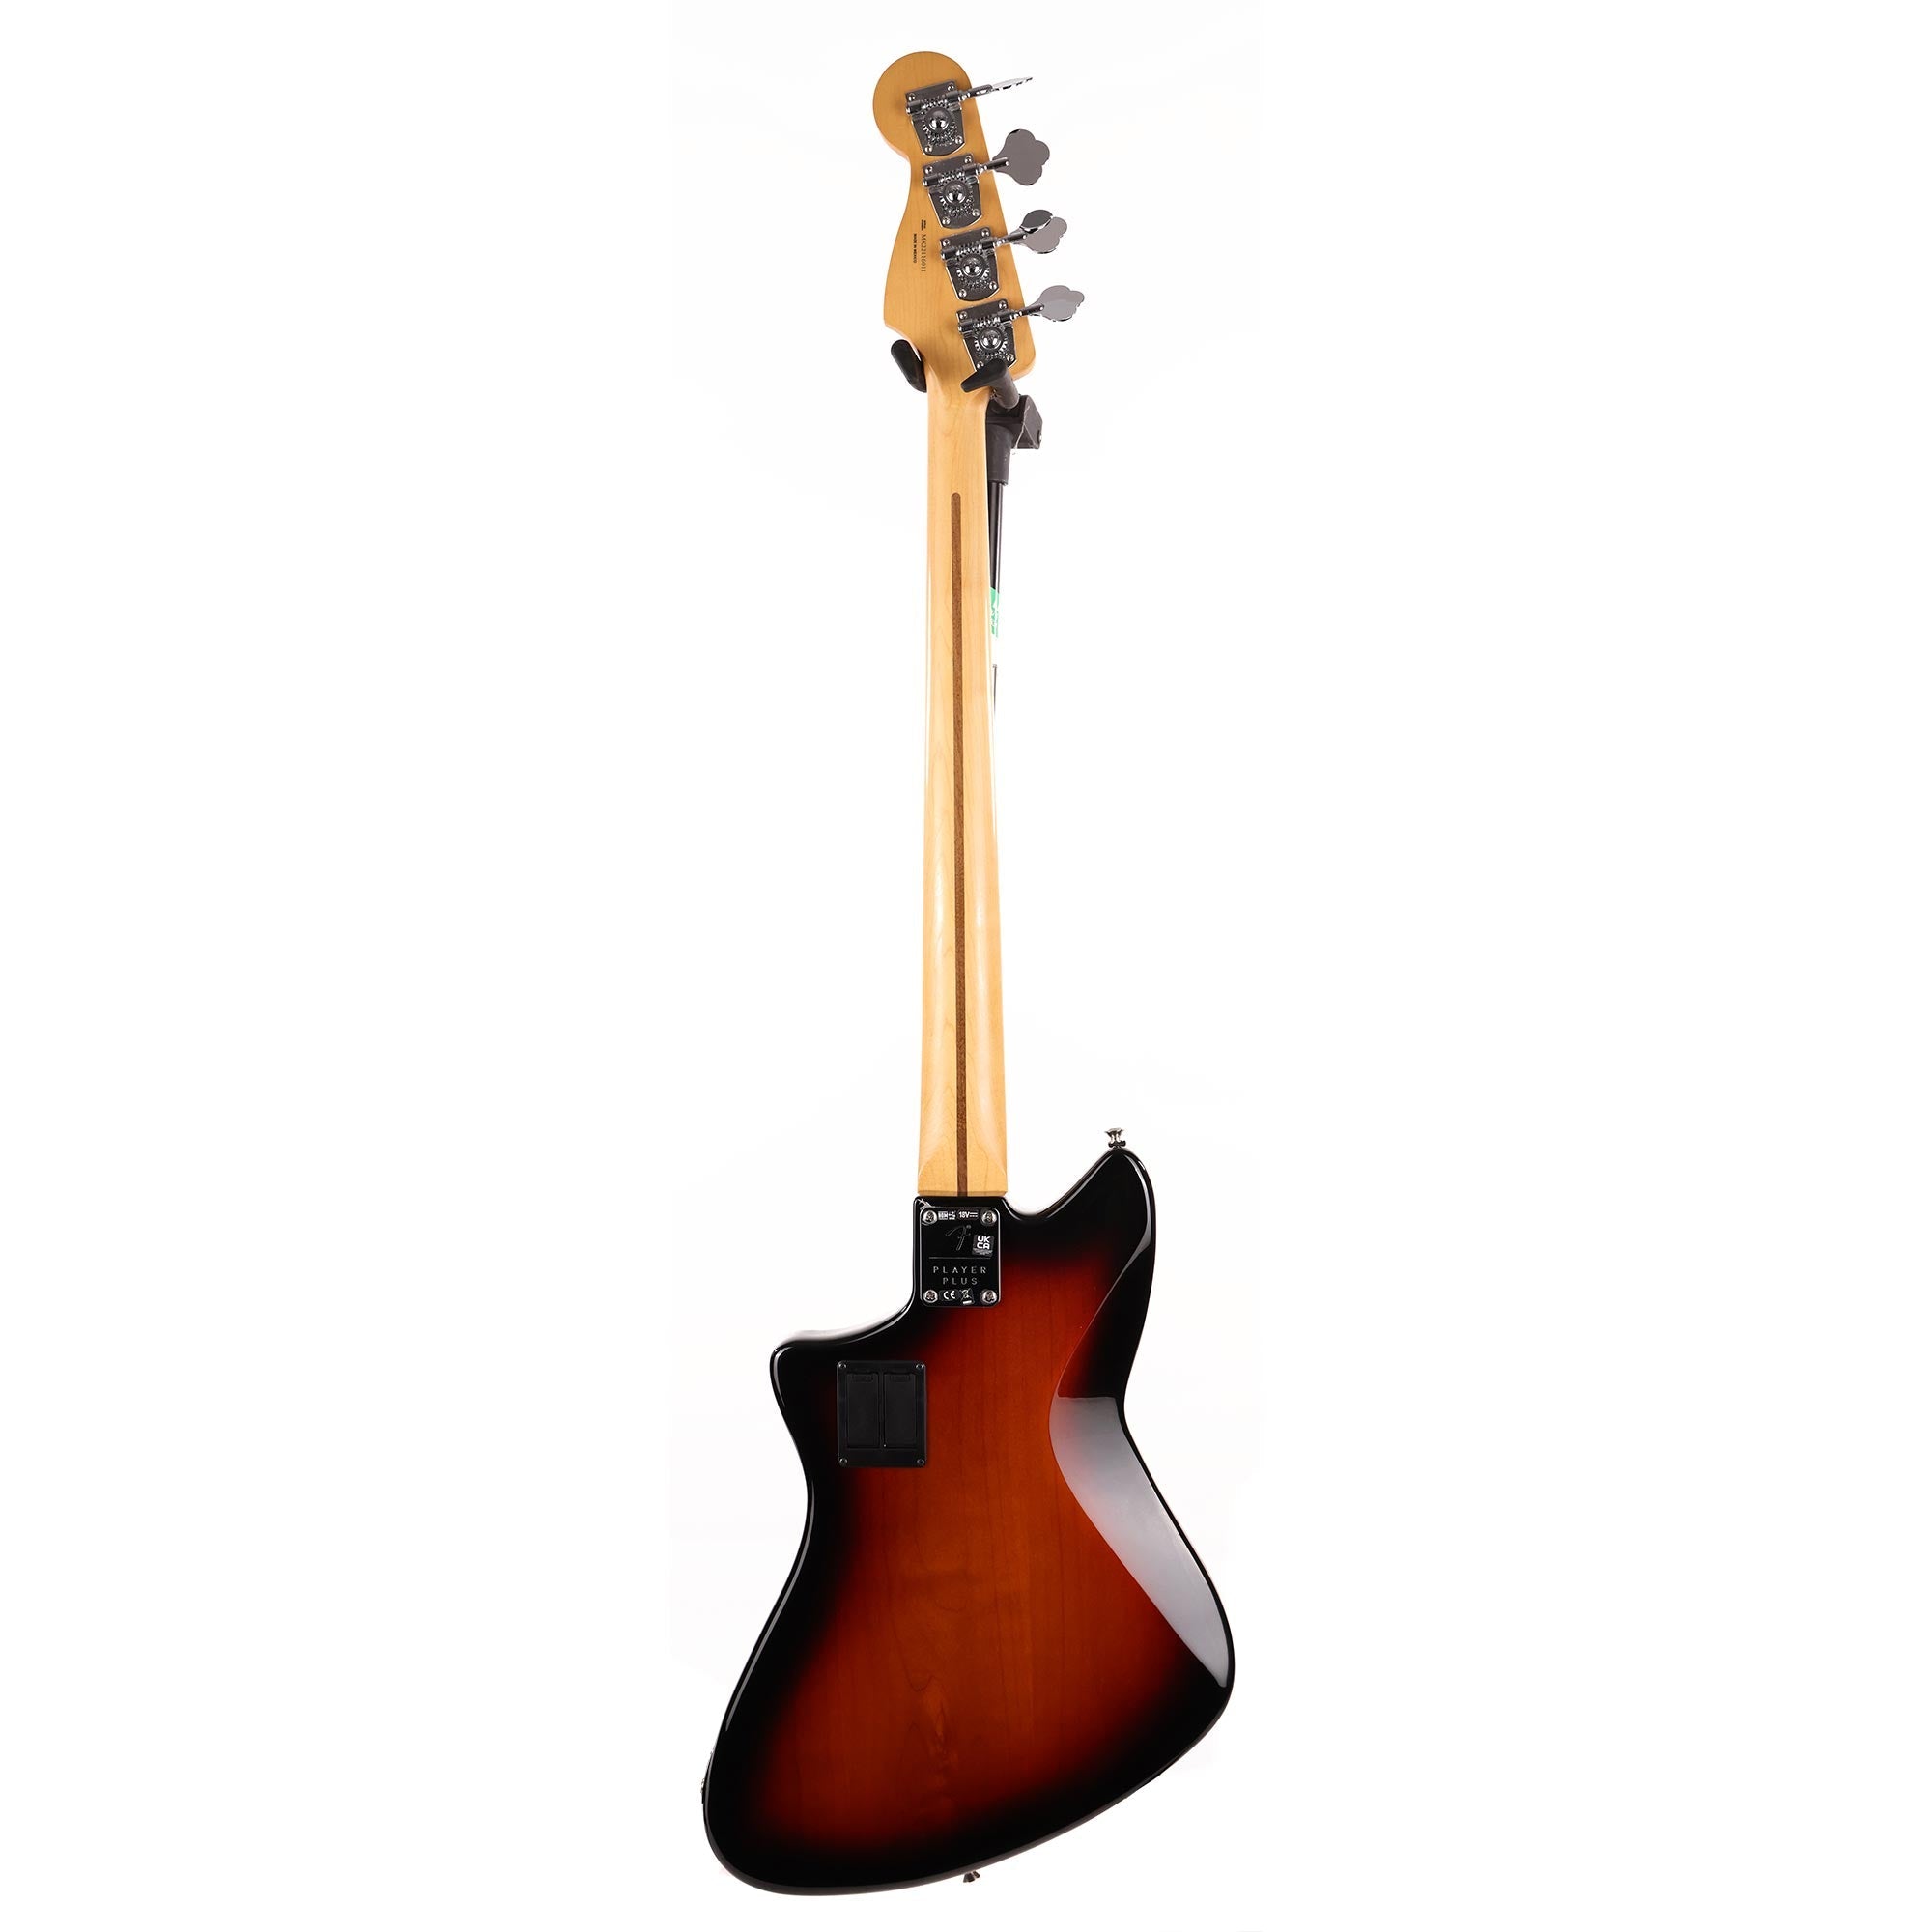 Fender Player Plus Active Meteora Bass 3-Color Sunburst Used | The